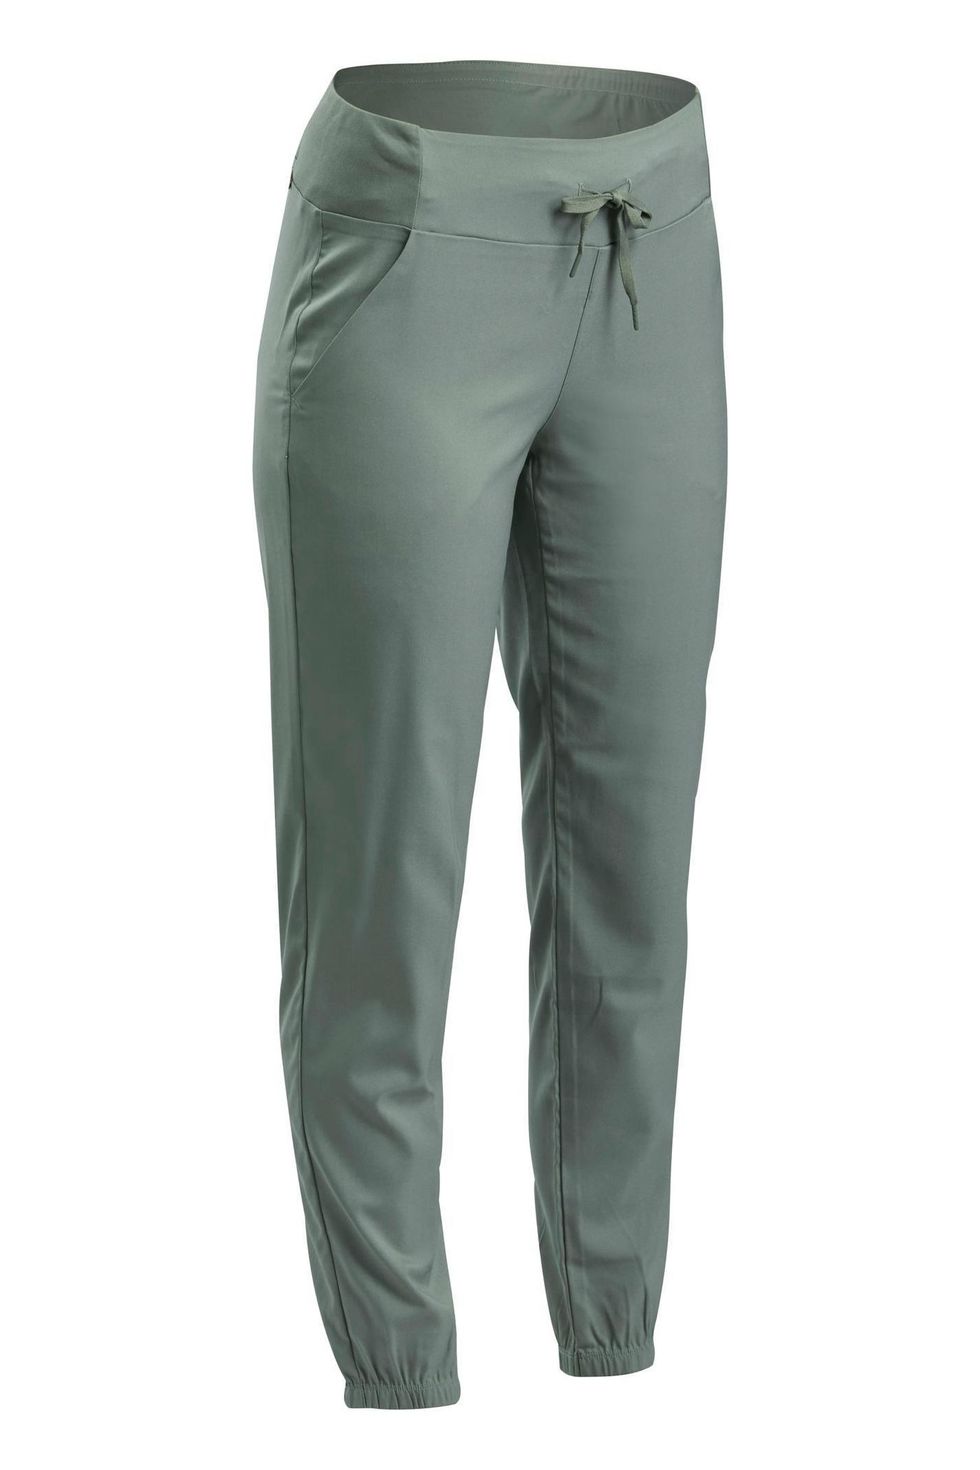 Buy the The North Face 100% Nylon Gray Hiking w Drawstring Pants